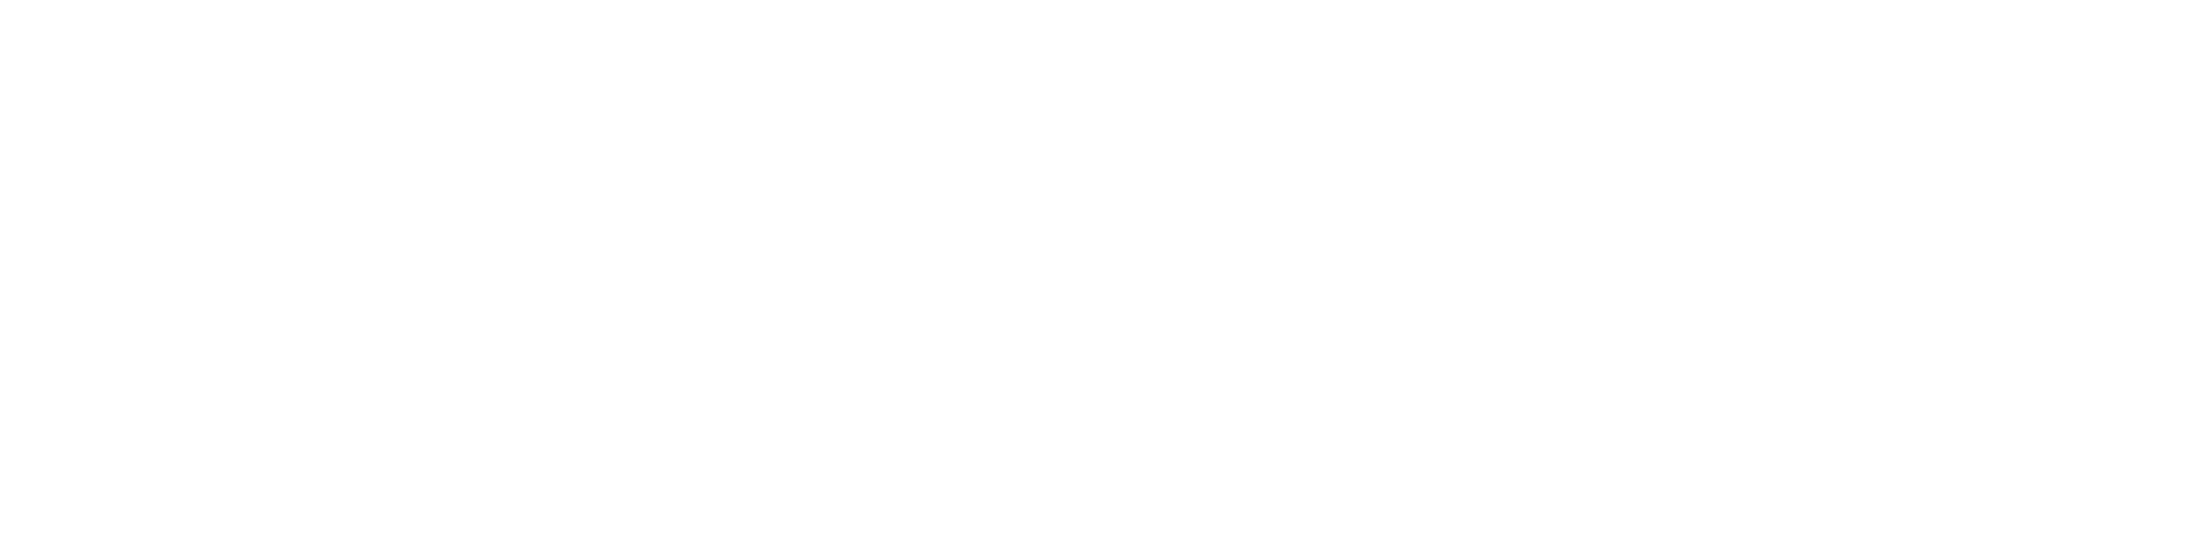 KCHUNG logo